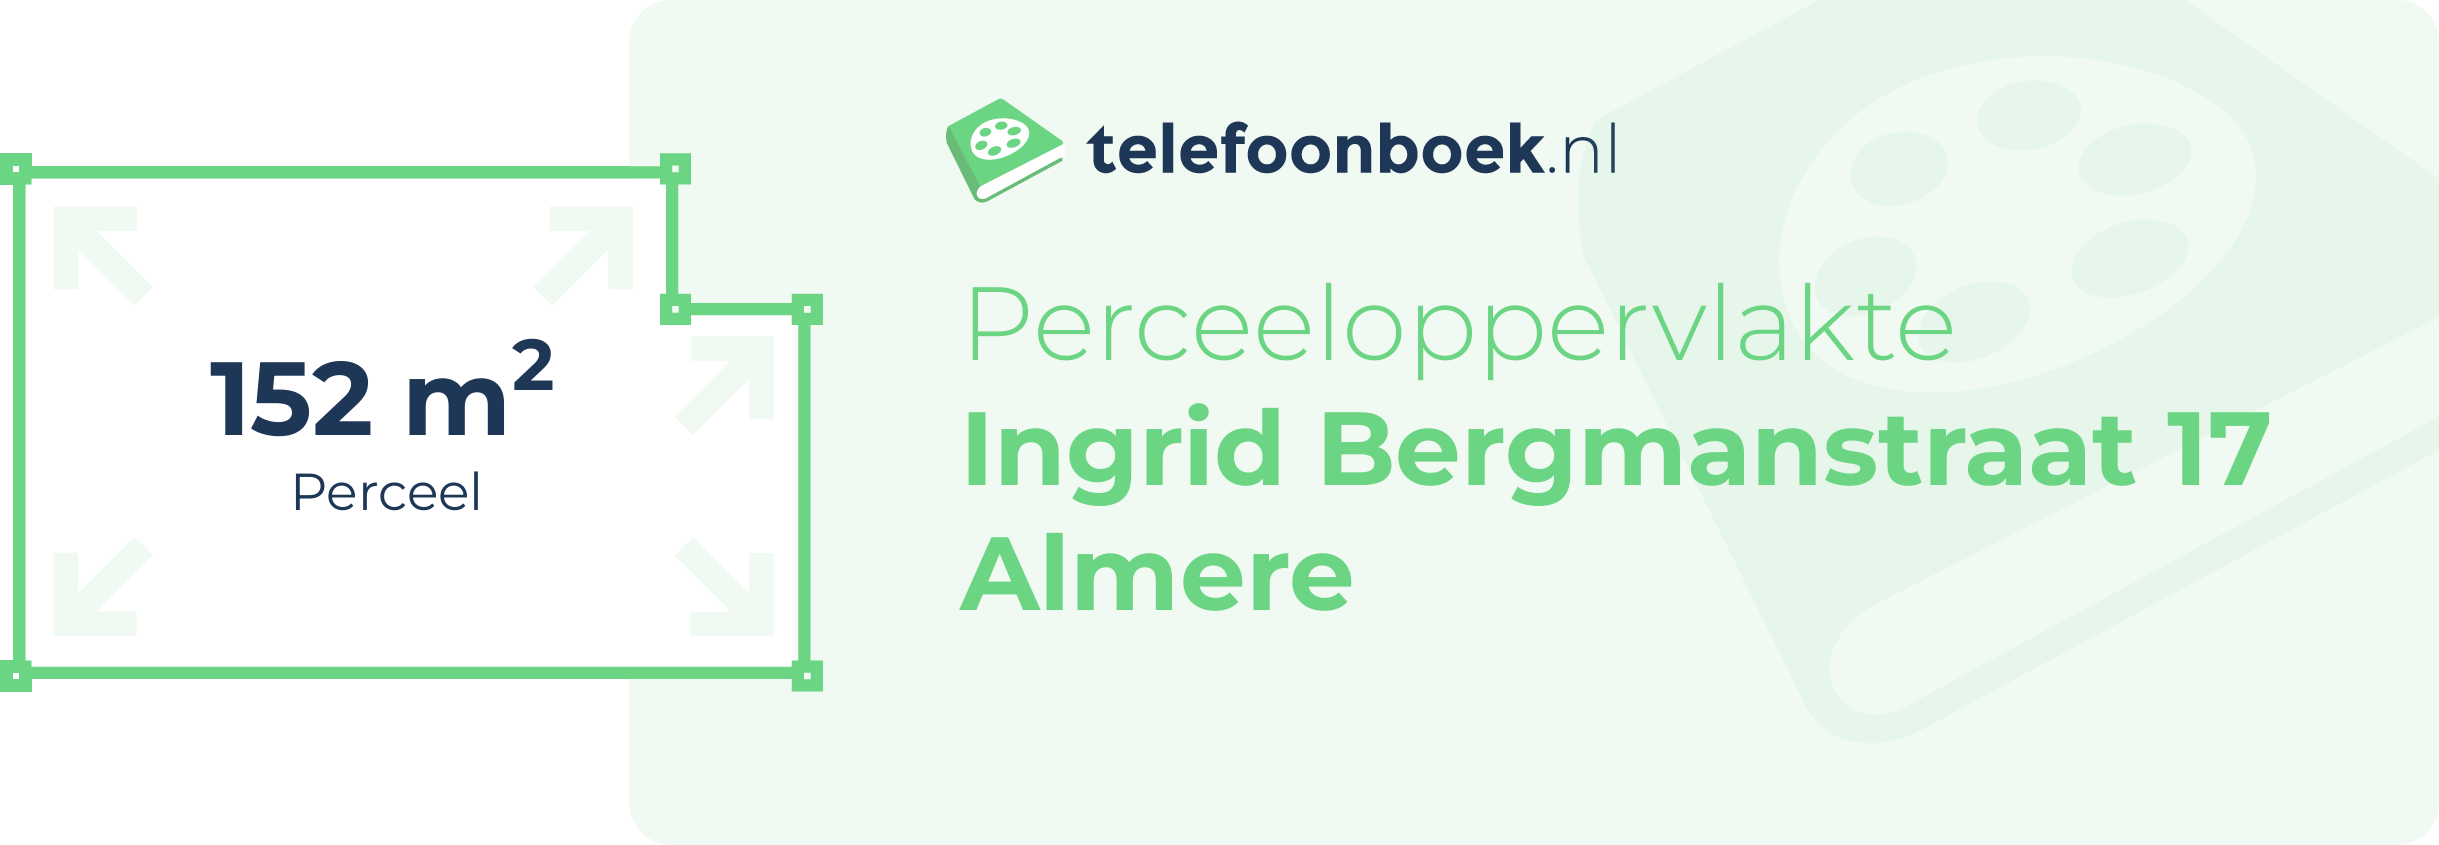 Perceeloppervlakte Ingrid Bergmanstraat 17 Almere